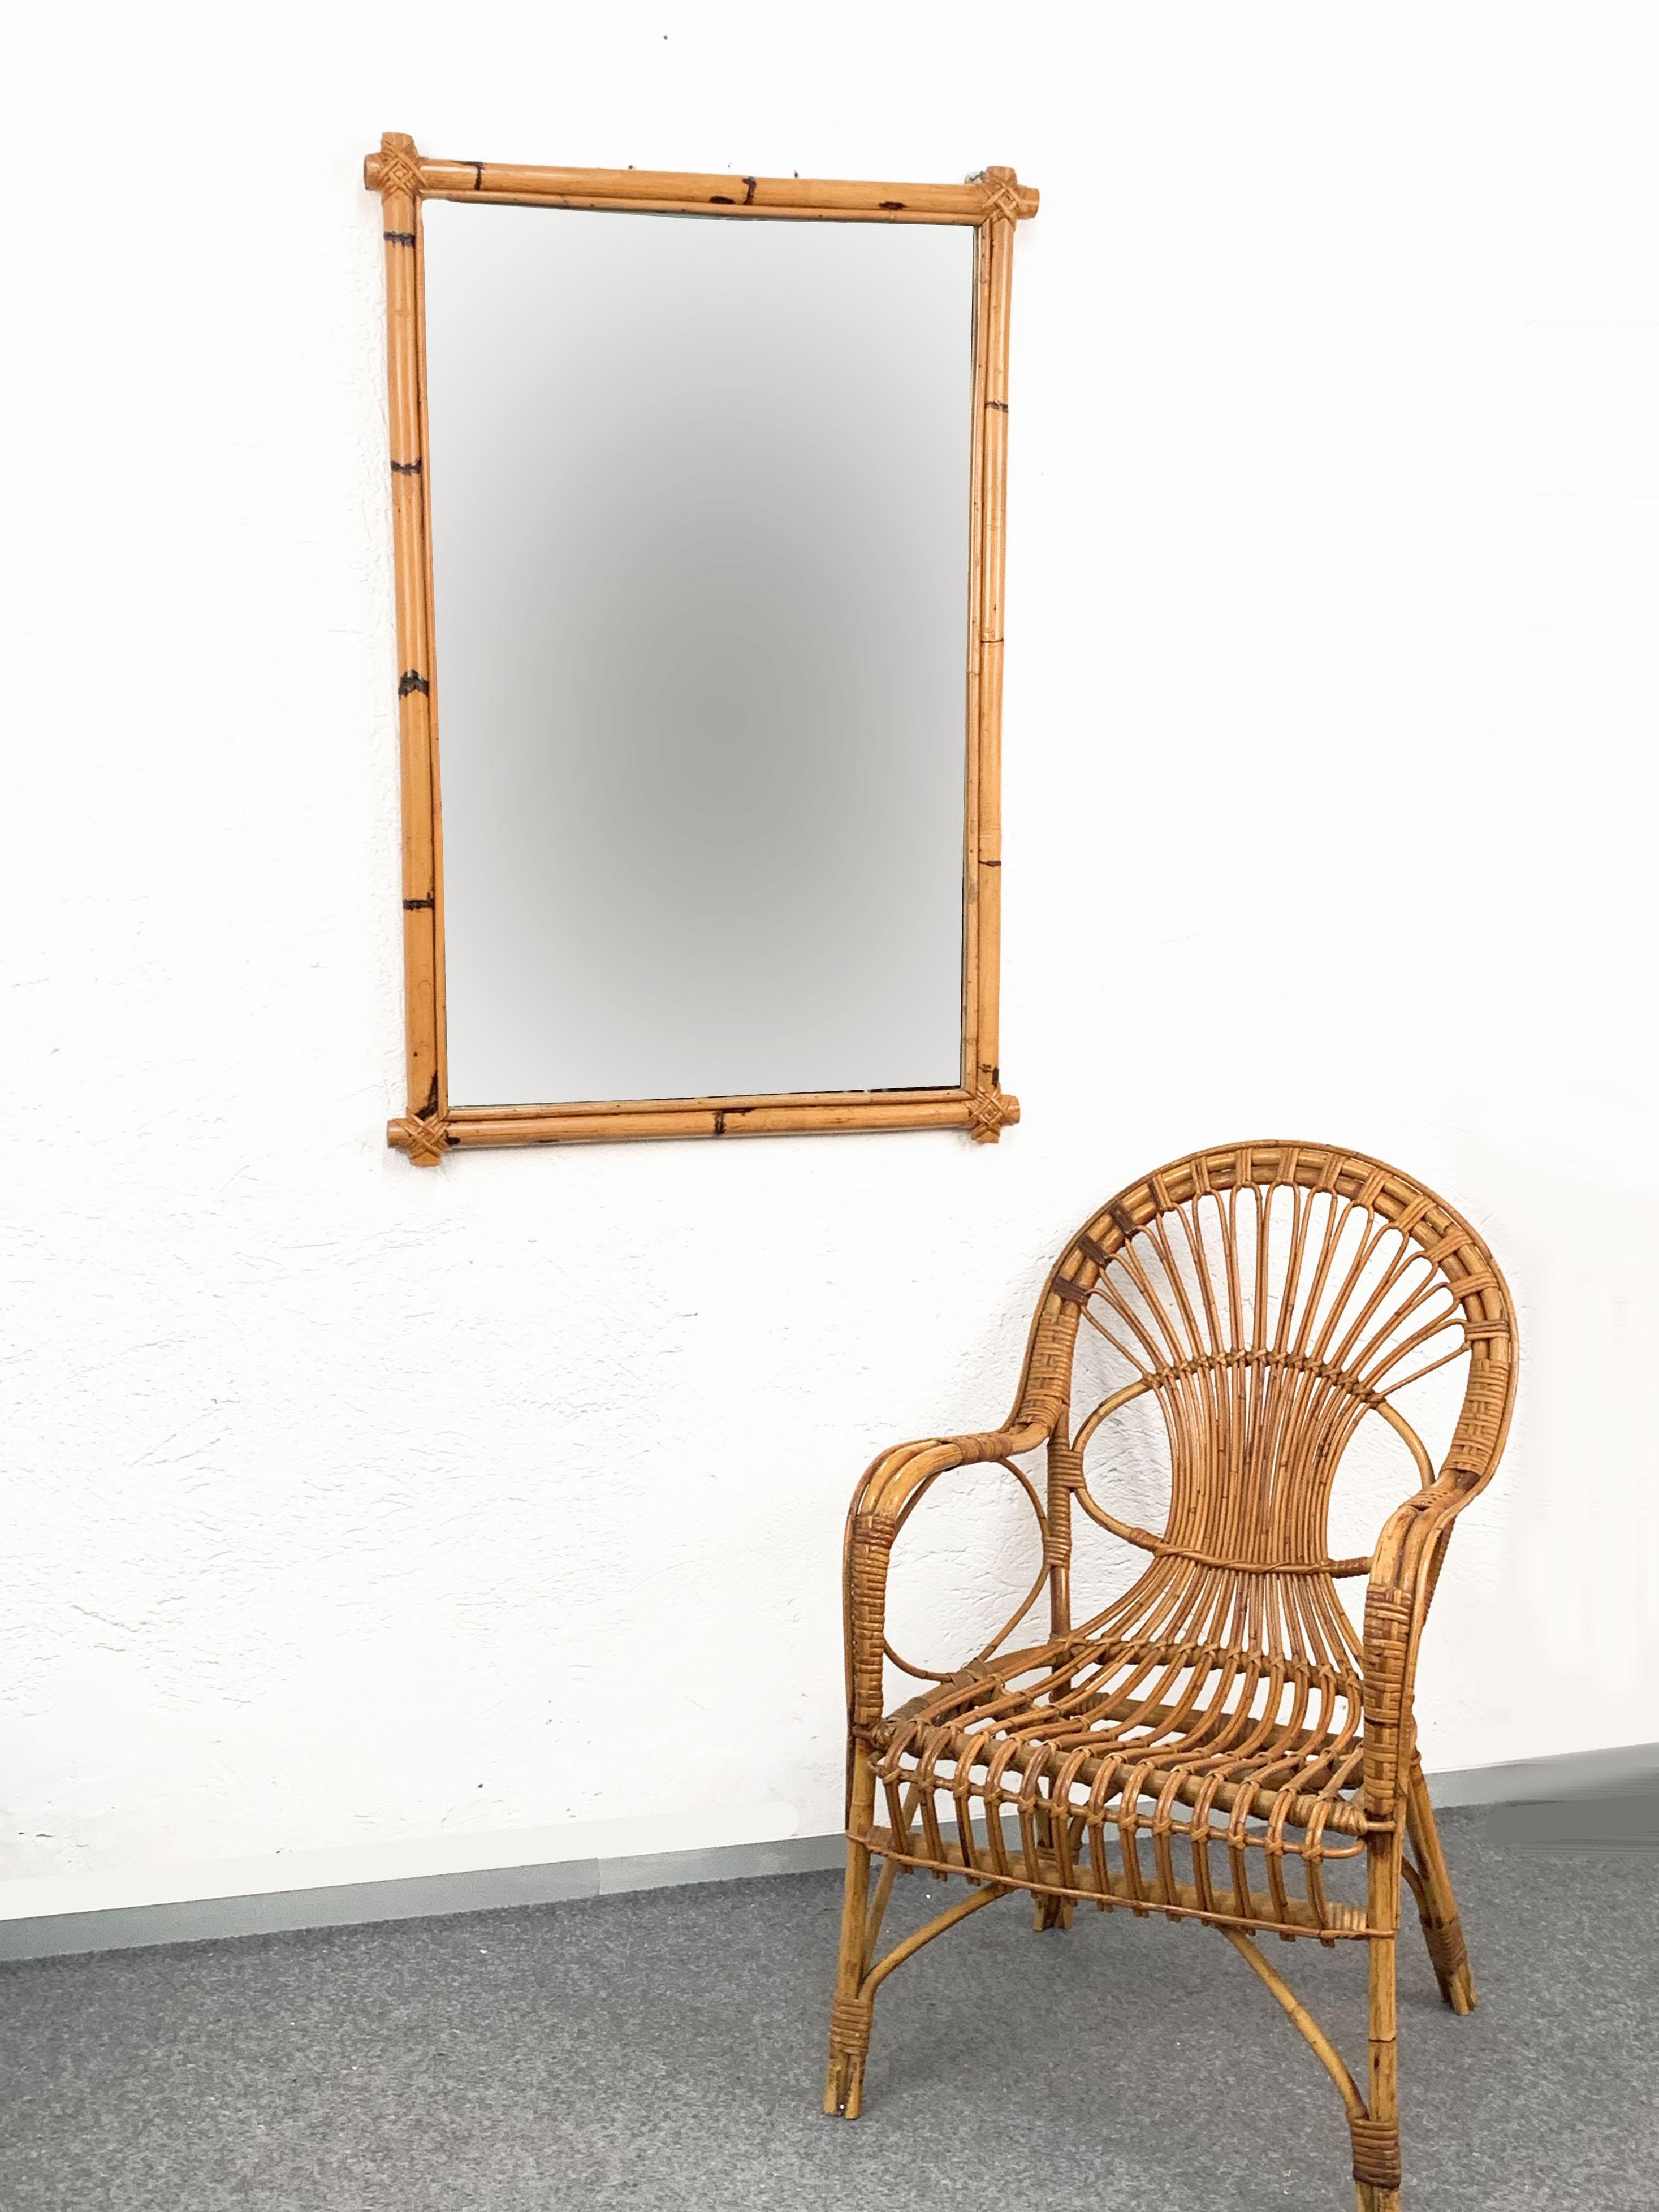 20th Century Italian Rectangular Mirror with Bamboo Woven Wicker Frame after Bonacina, 1970s